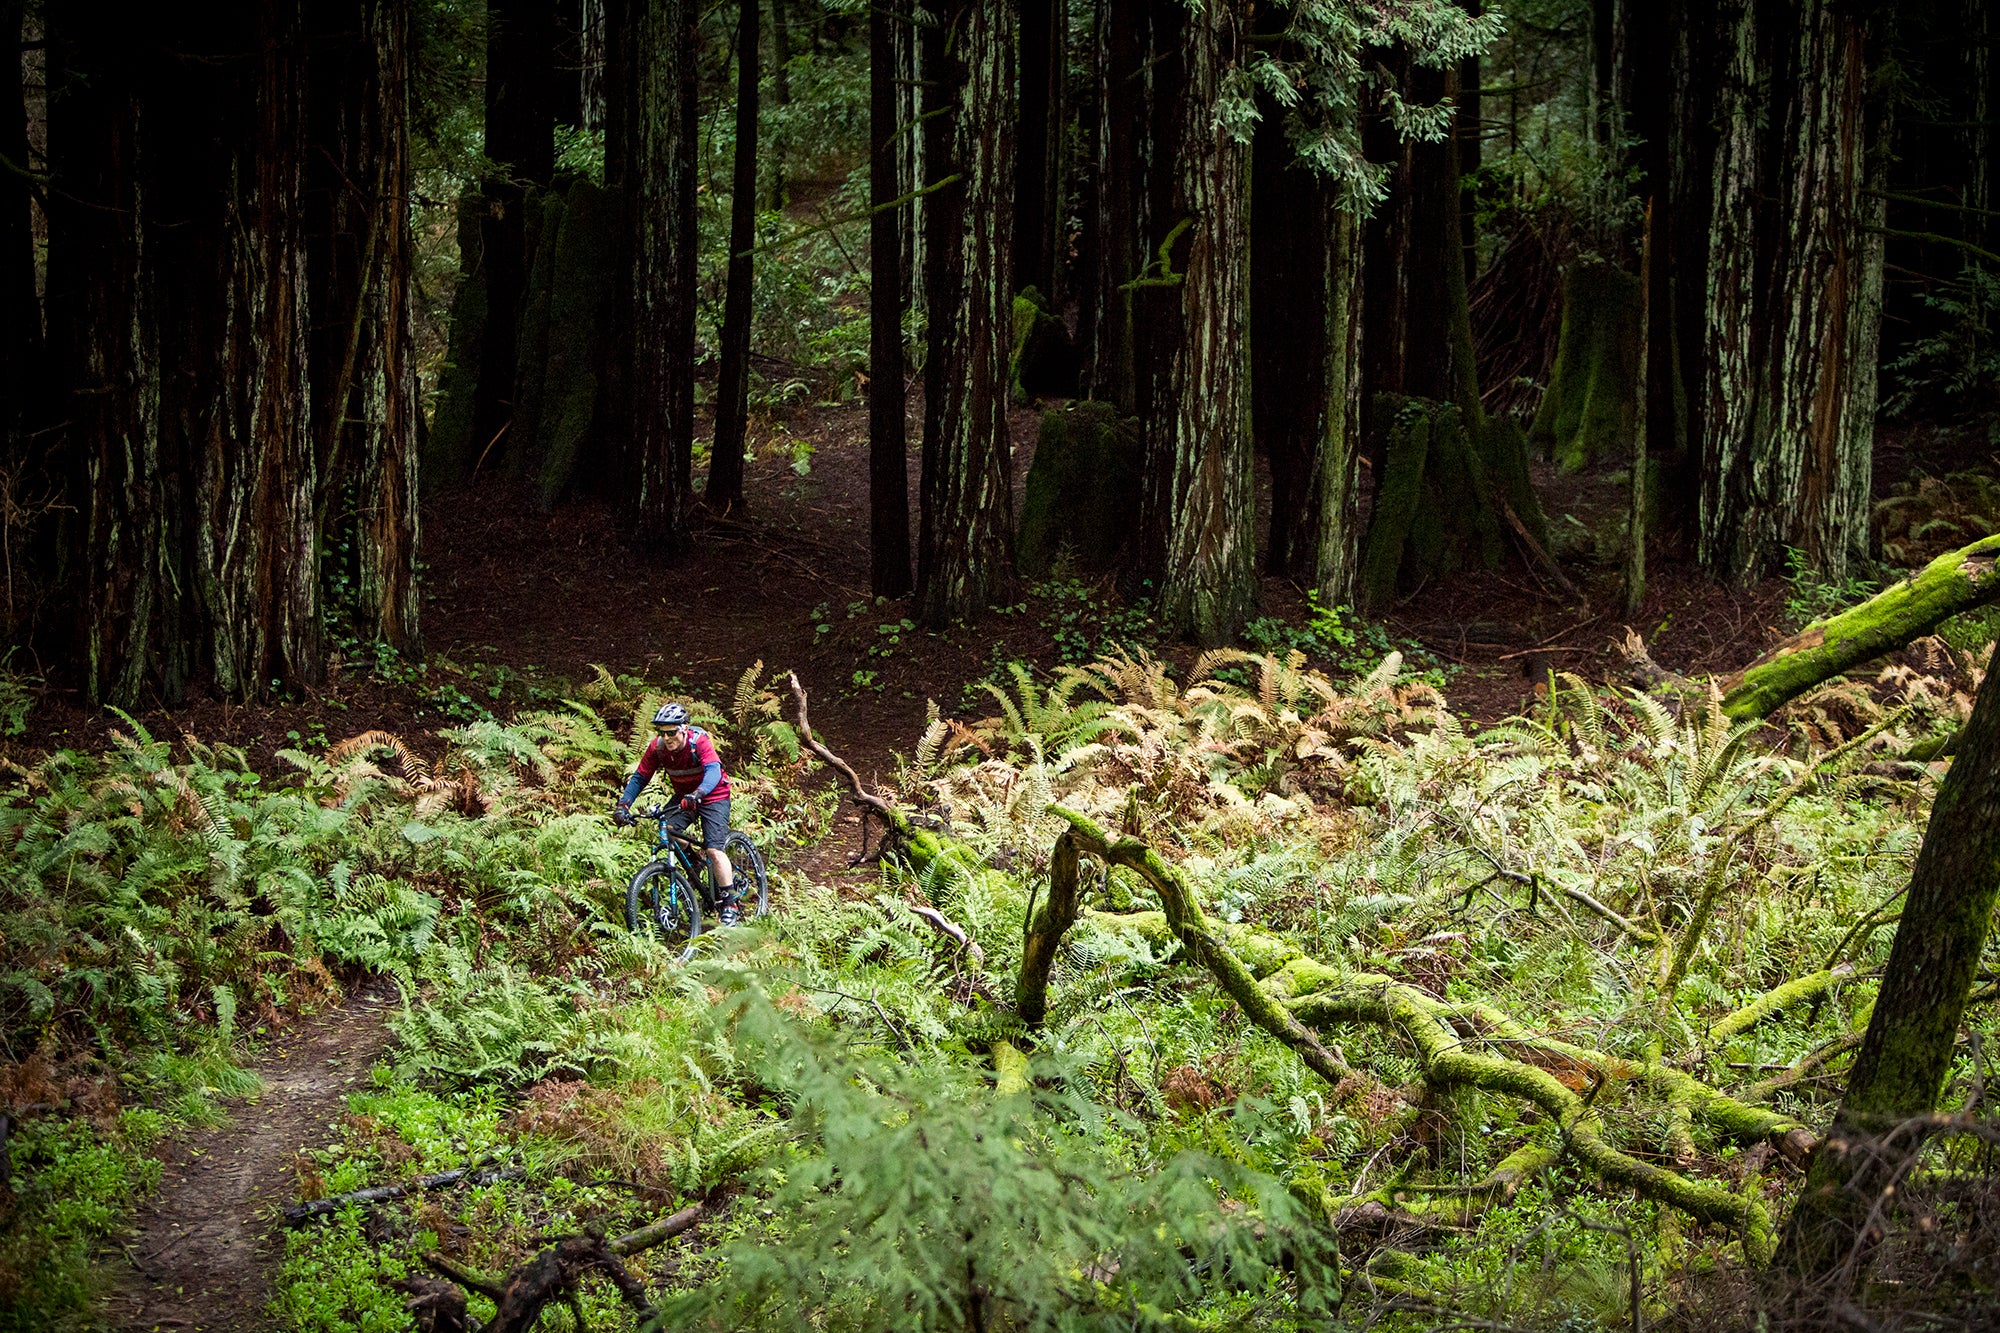 Mountain bike rider in forest